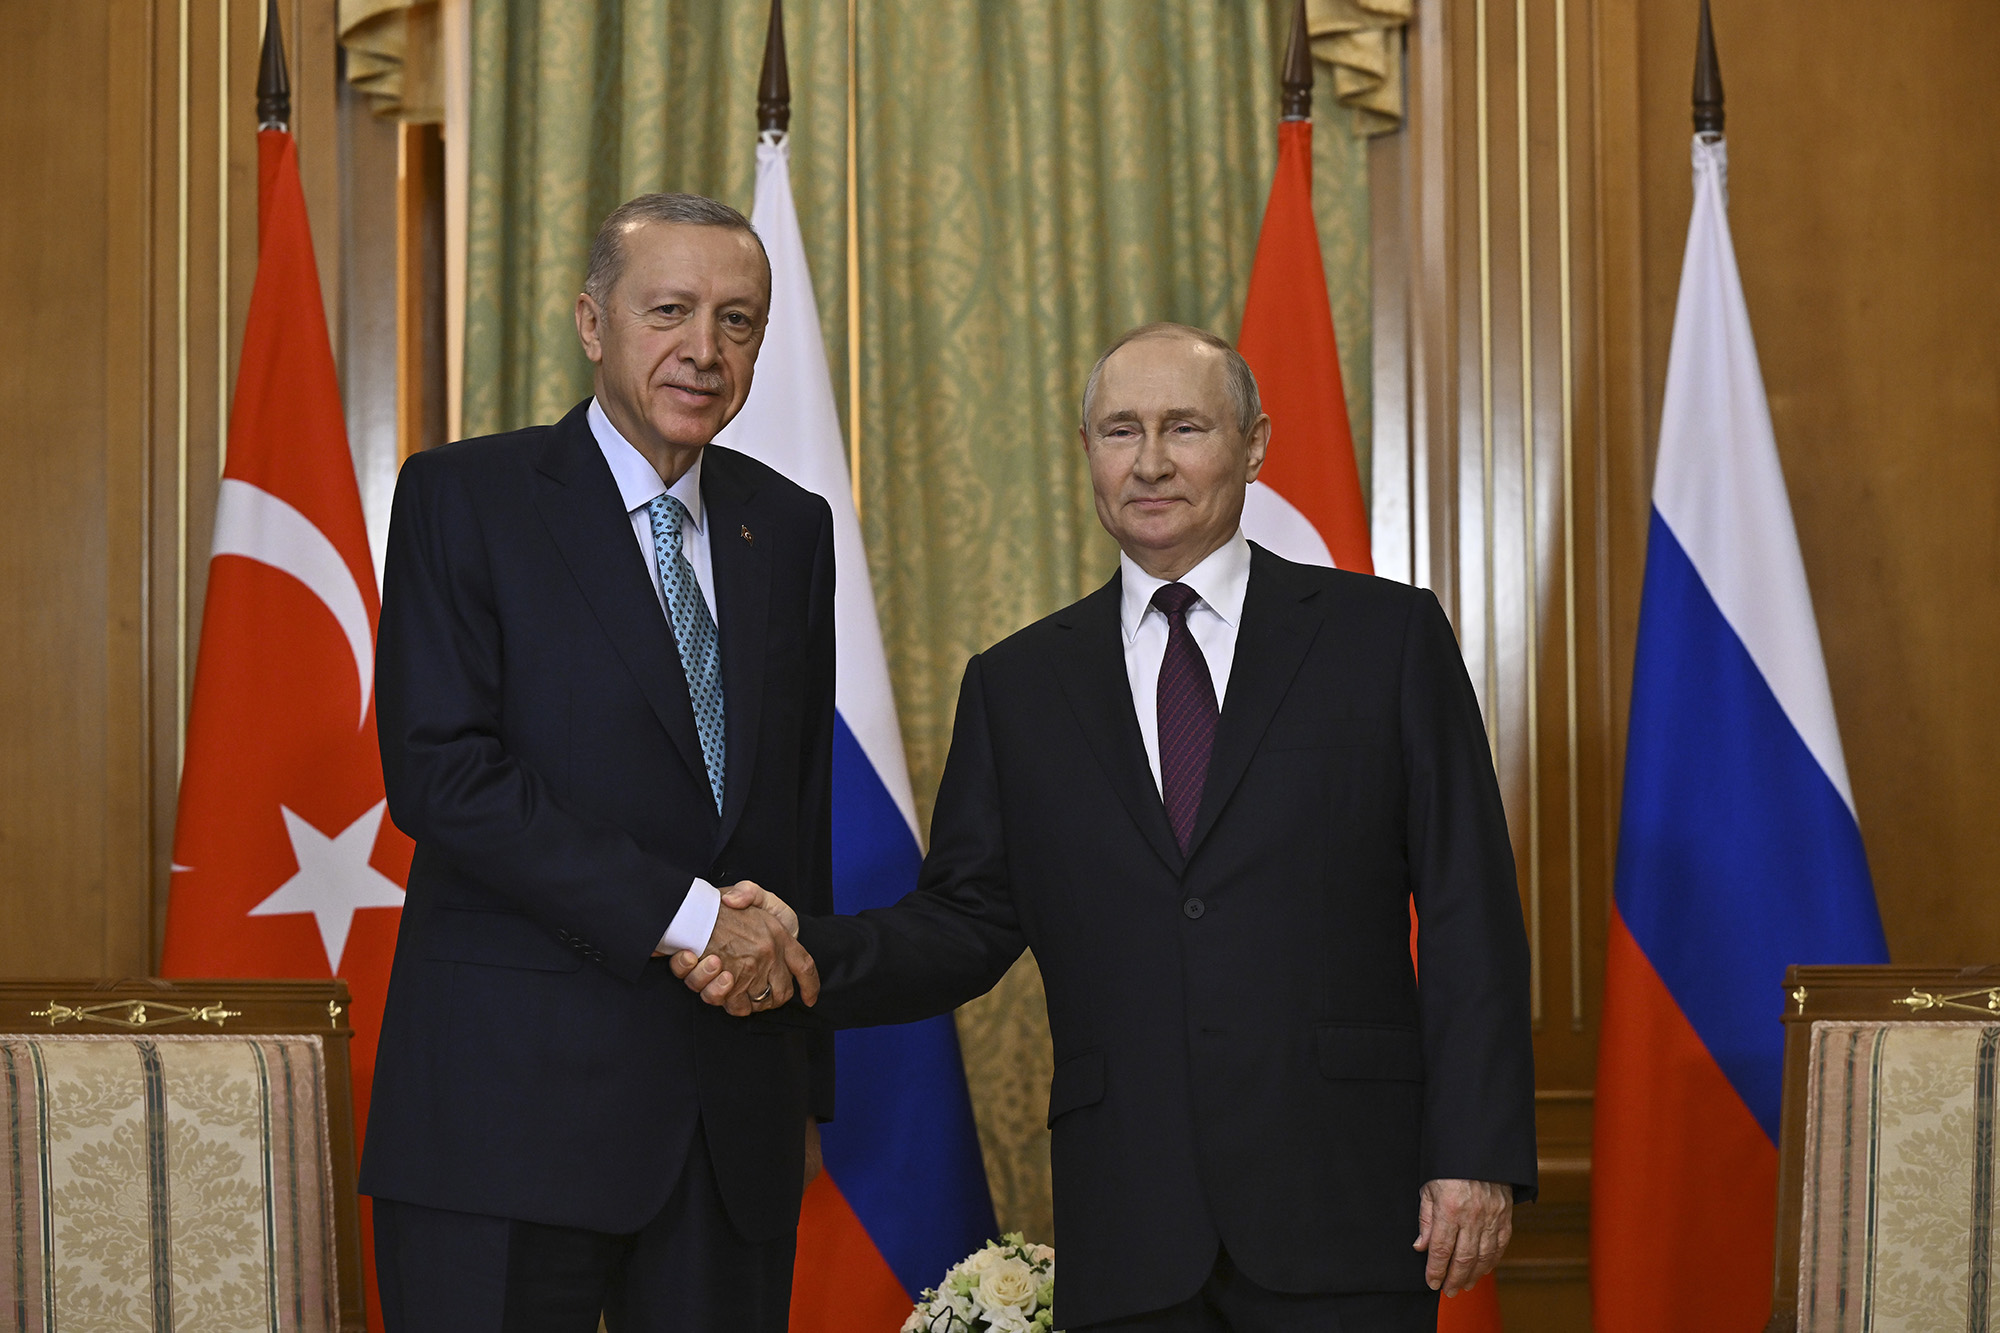 Putin and Erdogan begin talks in Sochi